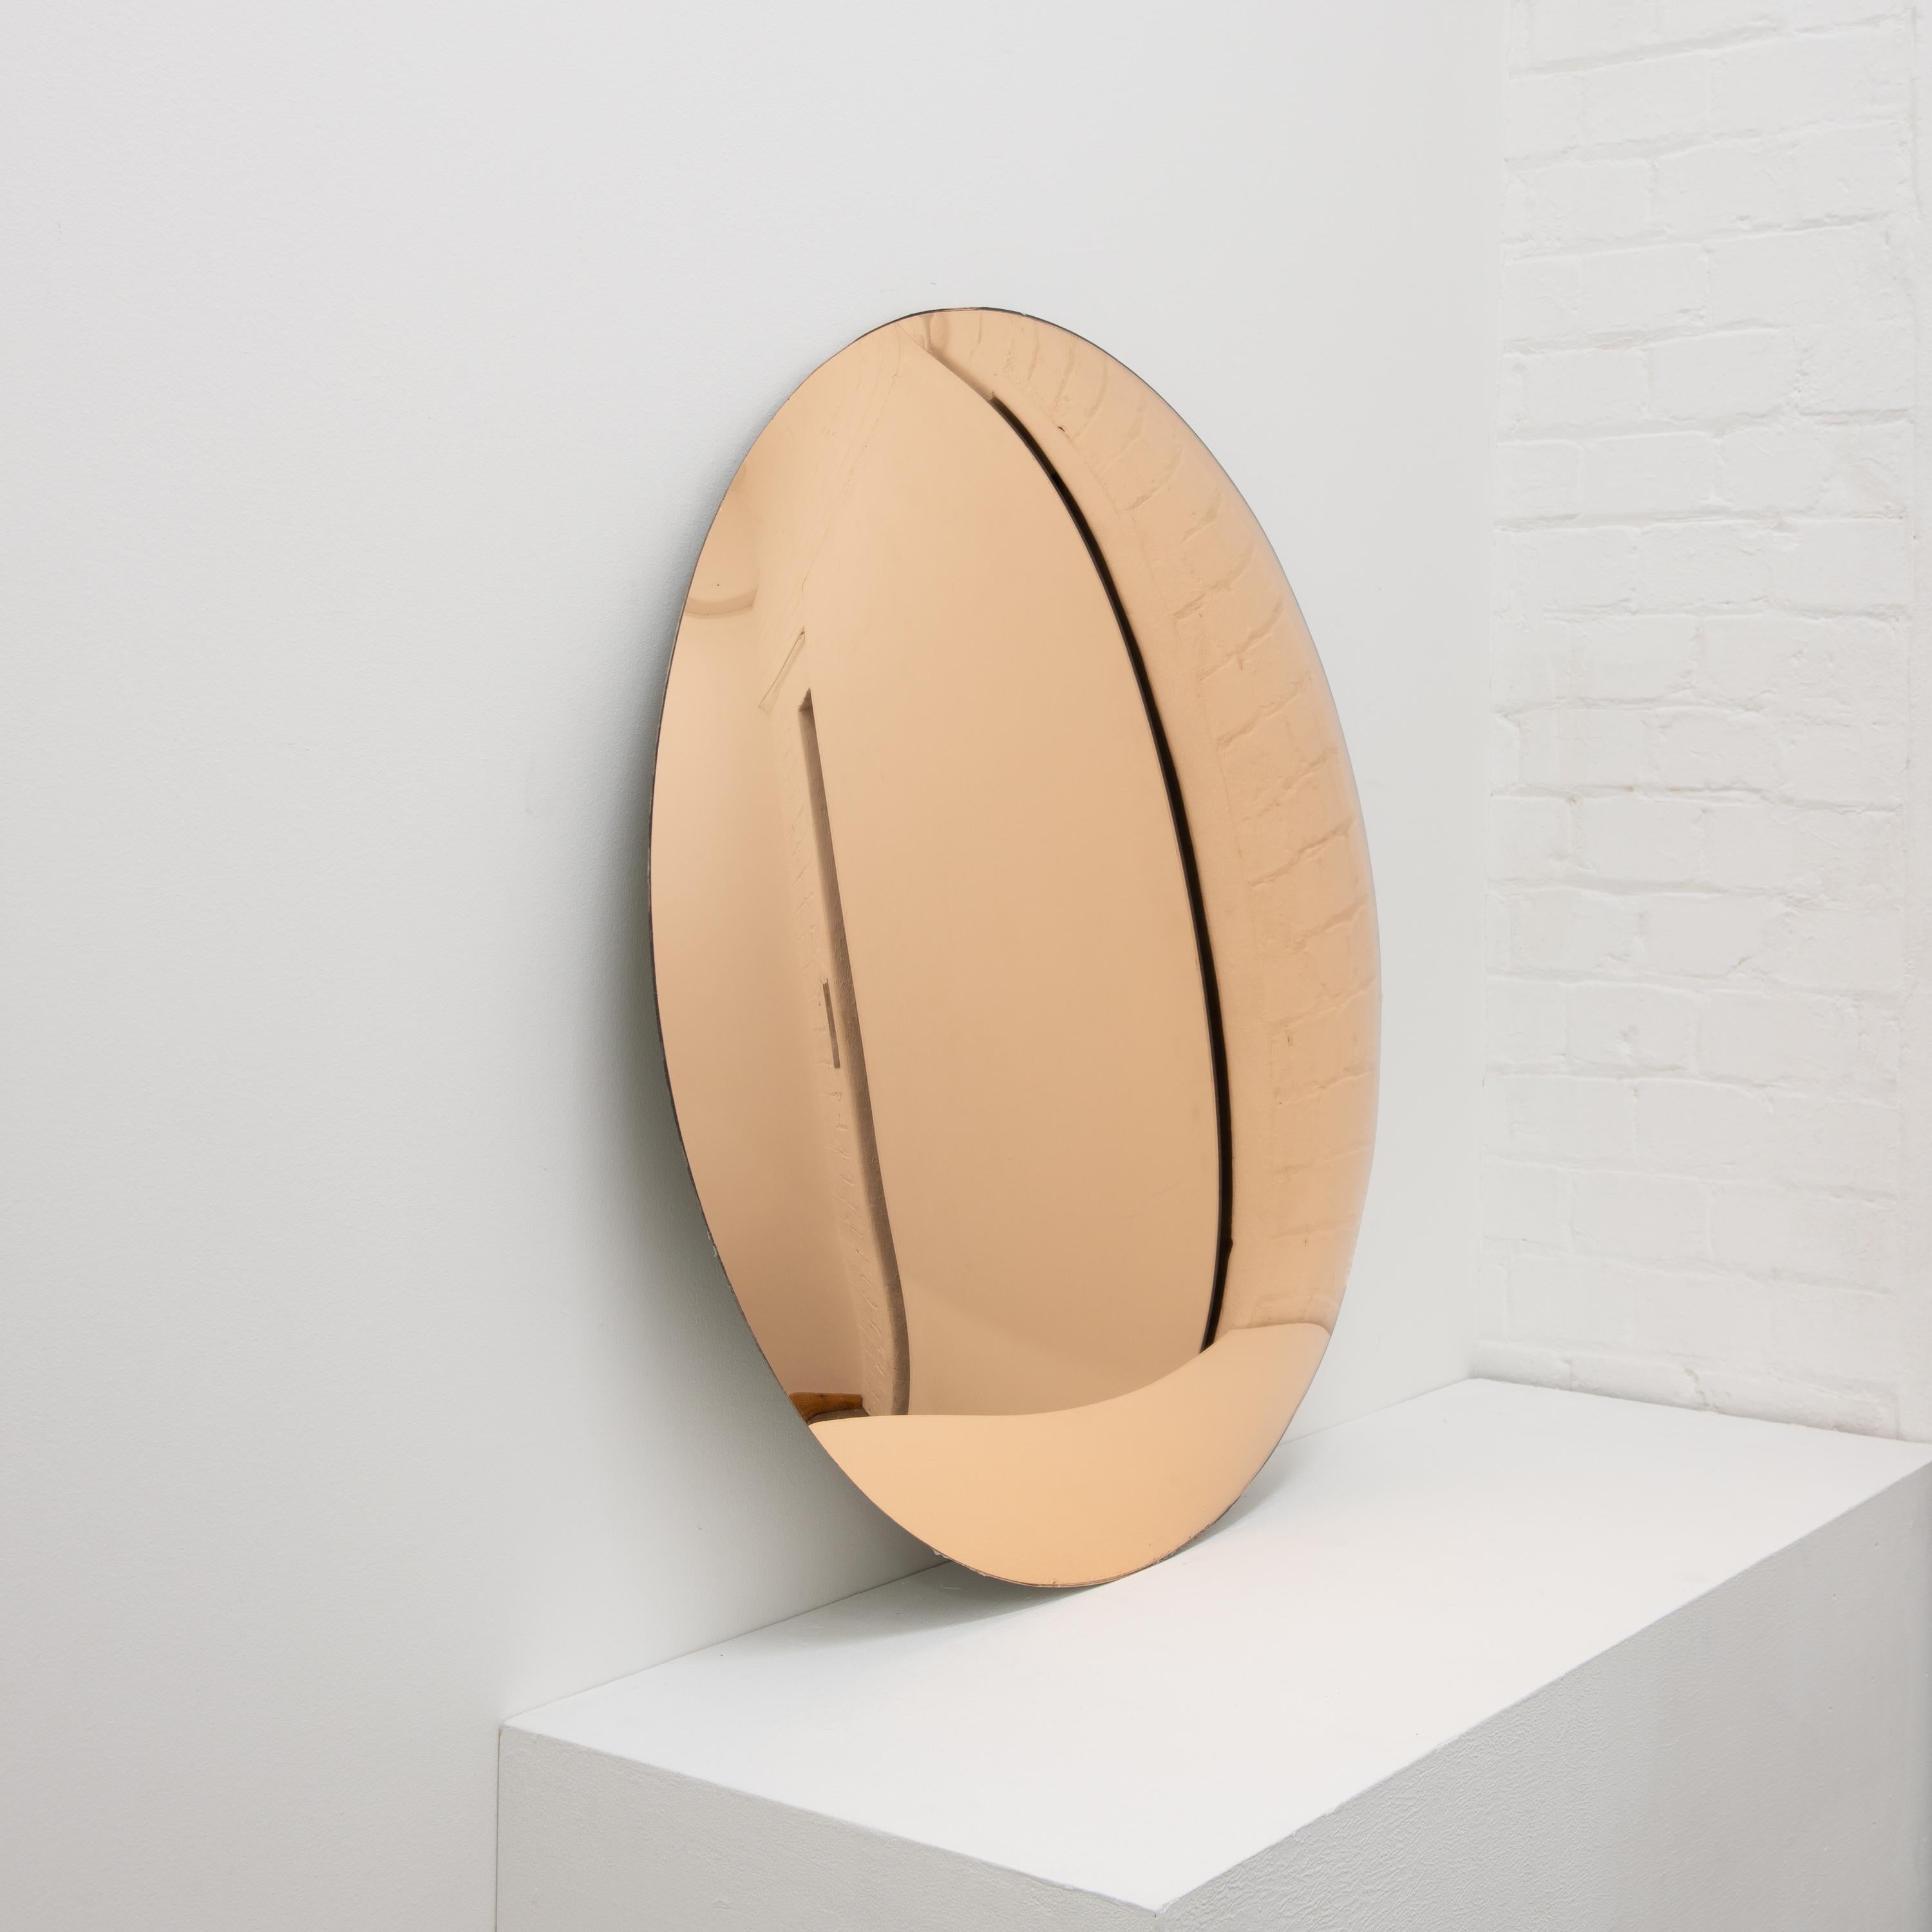 European Orbis Convex Rose Gold Handcrafted Frameless Round Mirror w Brass Clips, Large